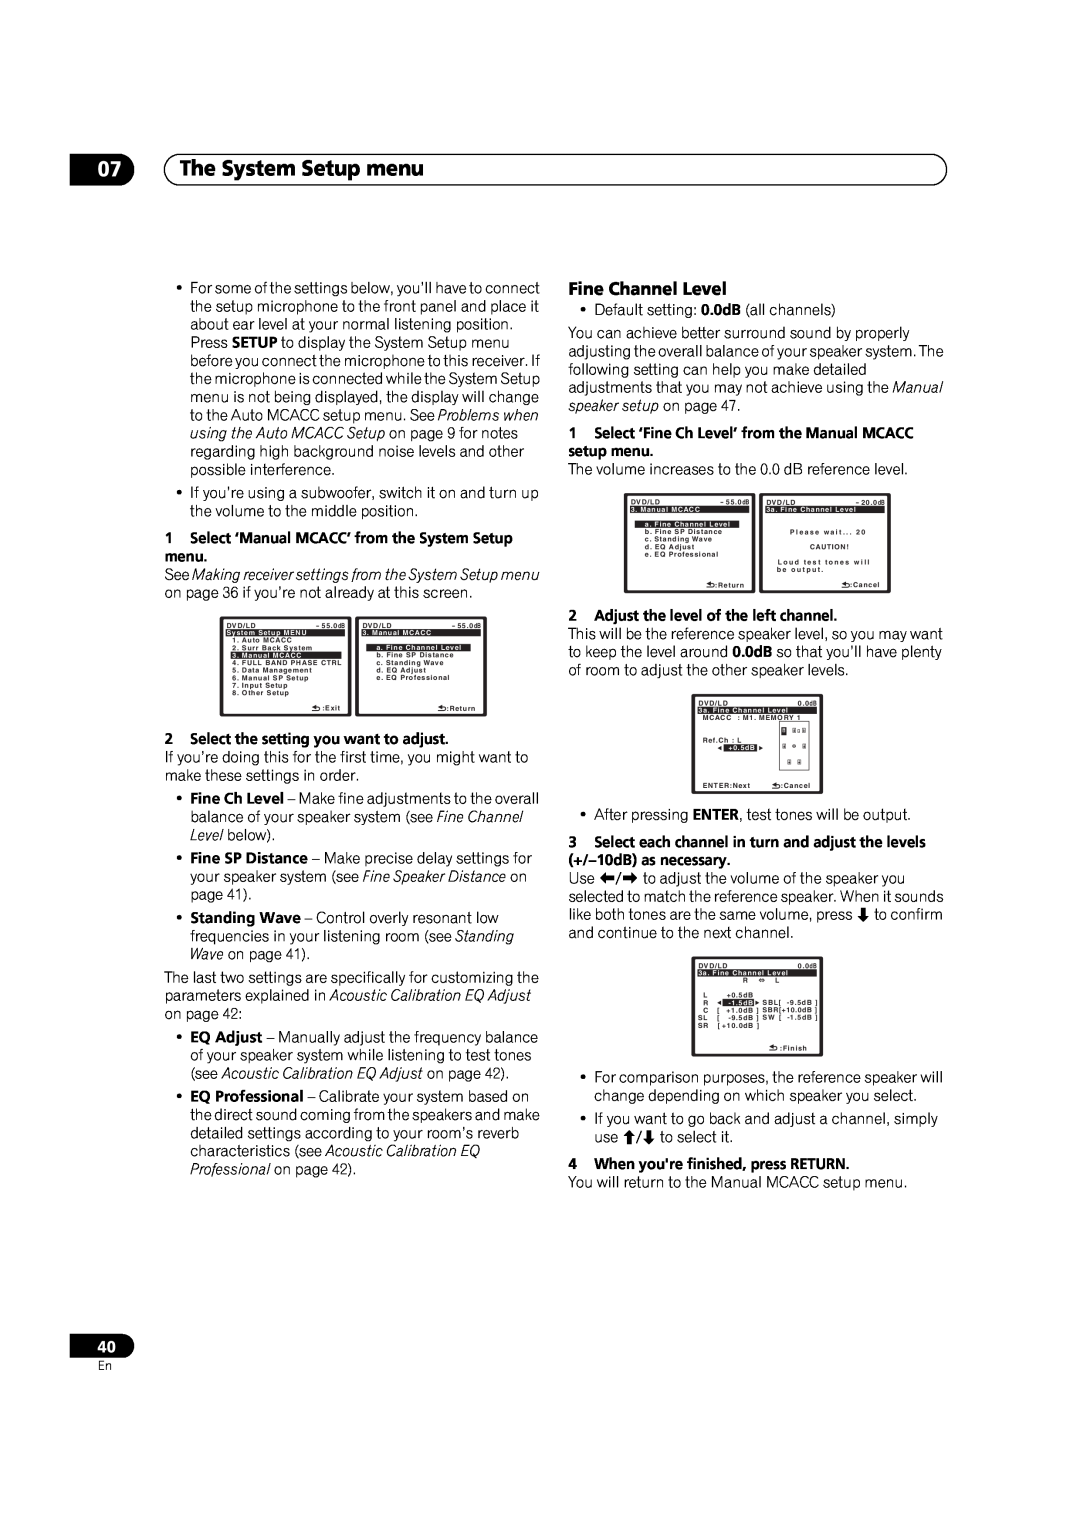 DreamGEAR VSX-94TXH, VSX-92TXH Fine Channel Level, The System Setup menu, Select ‘Manual MCACC’ from the System Setup menu 